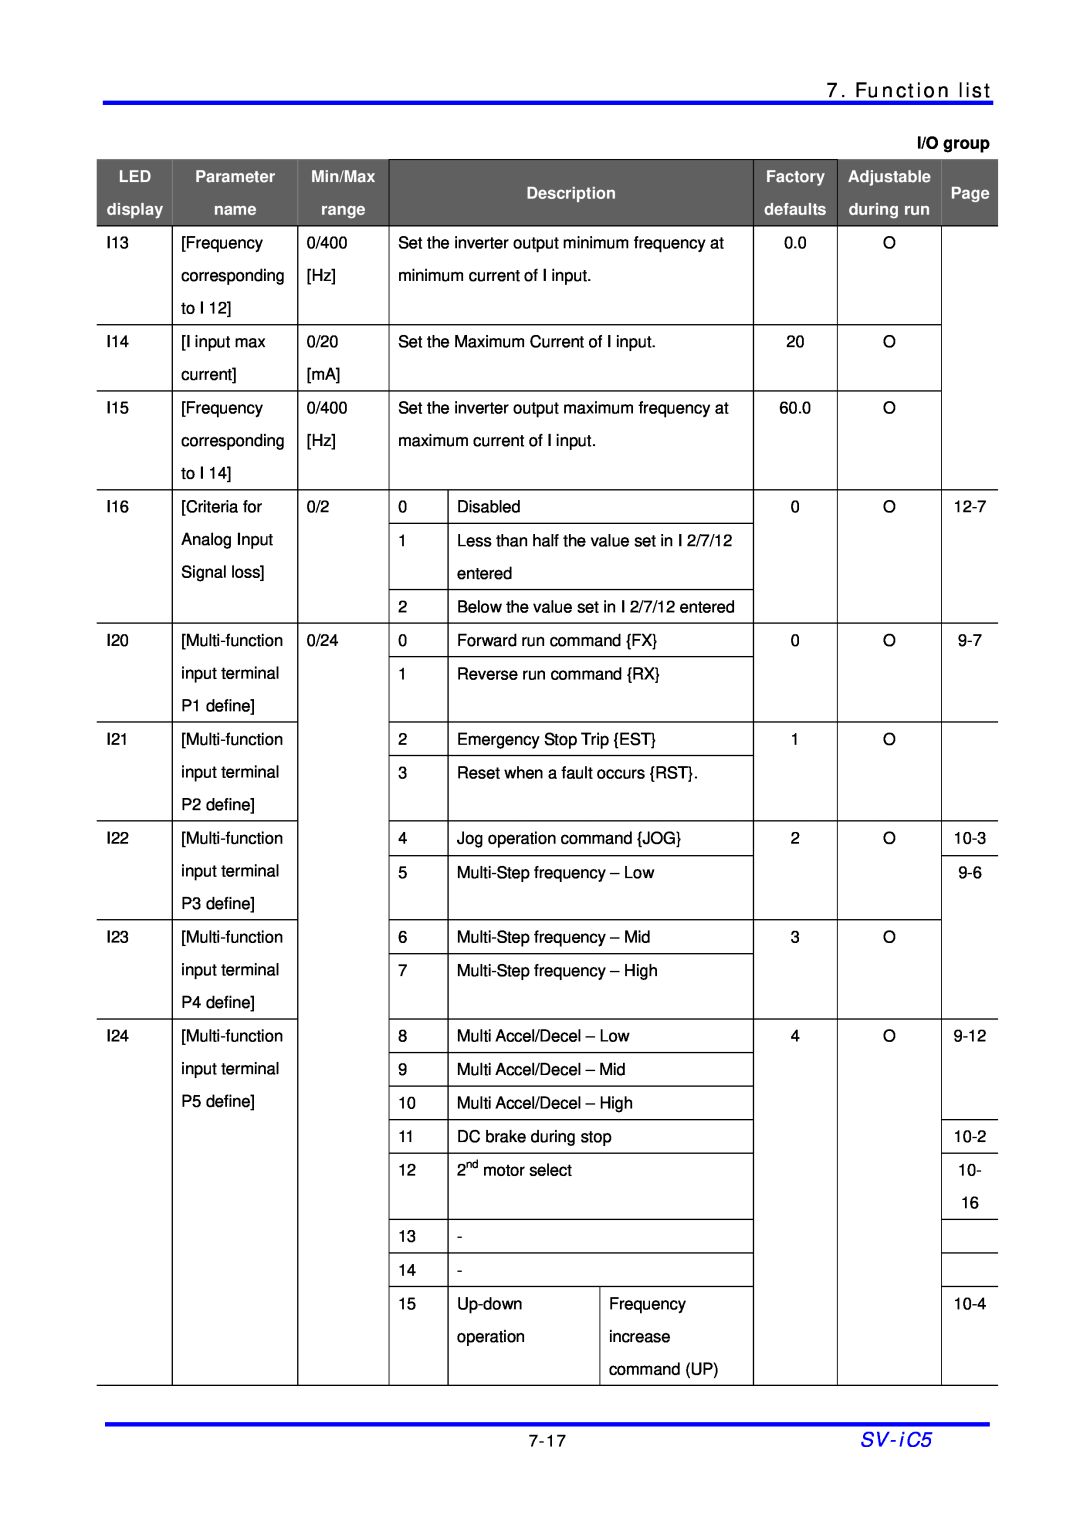 LG Electronics SV-iC5 Series manual Function list, I/O group 